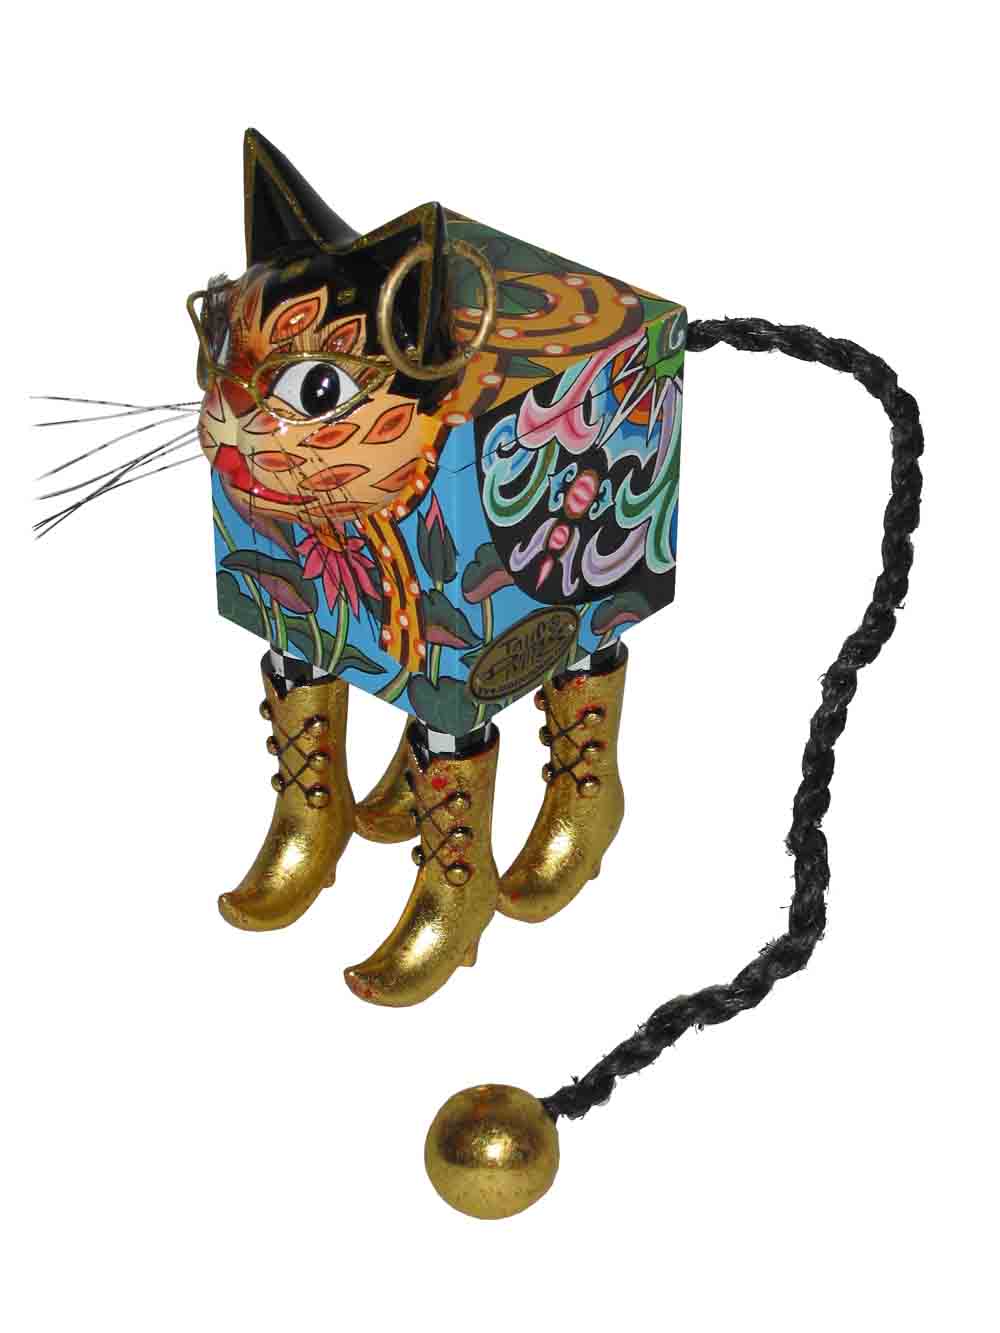 toms-drag-amaru-design-katze-box-cat-caddy-s-3659